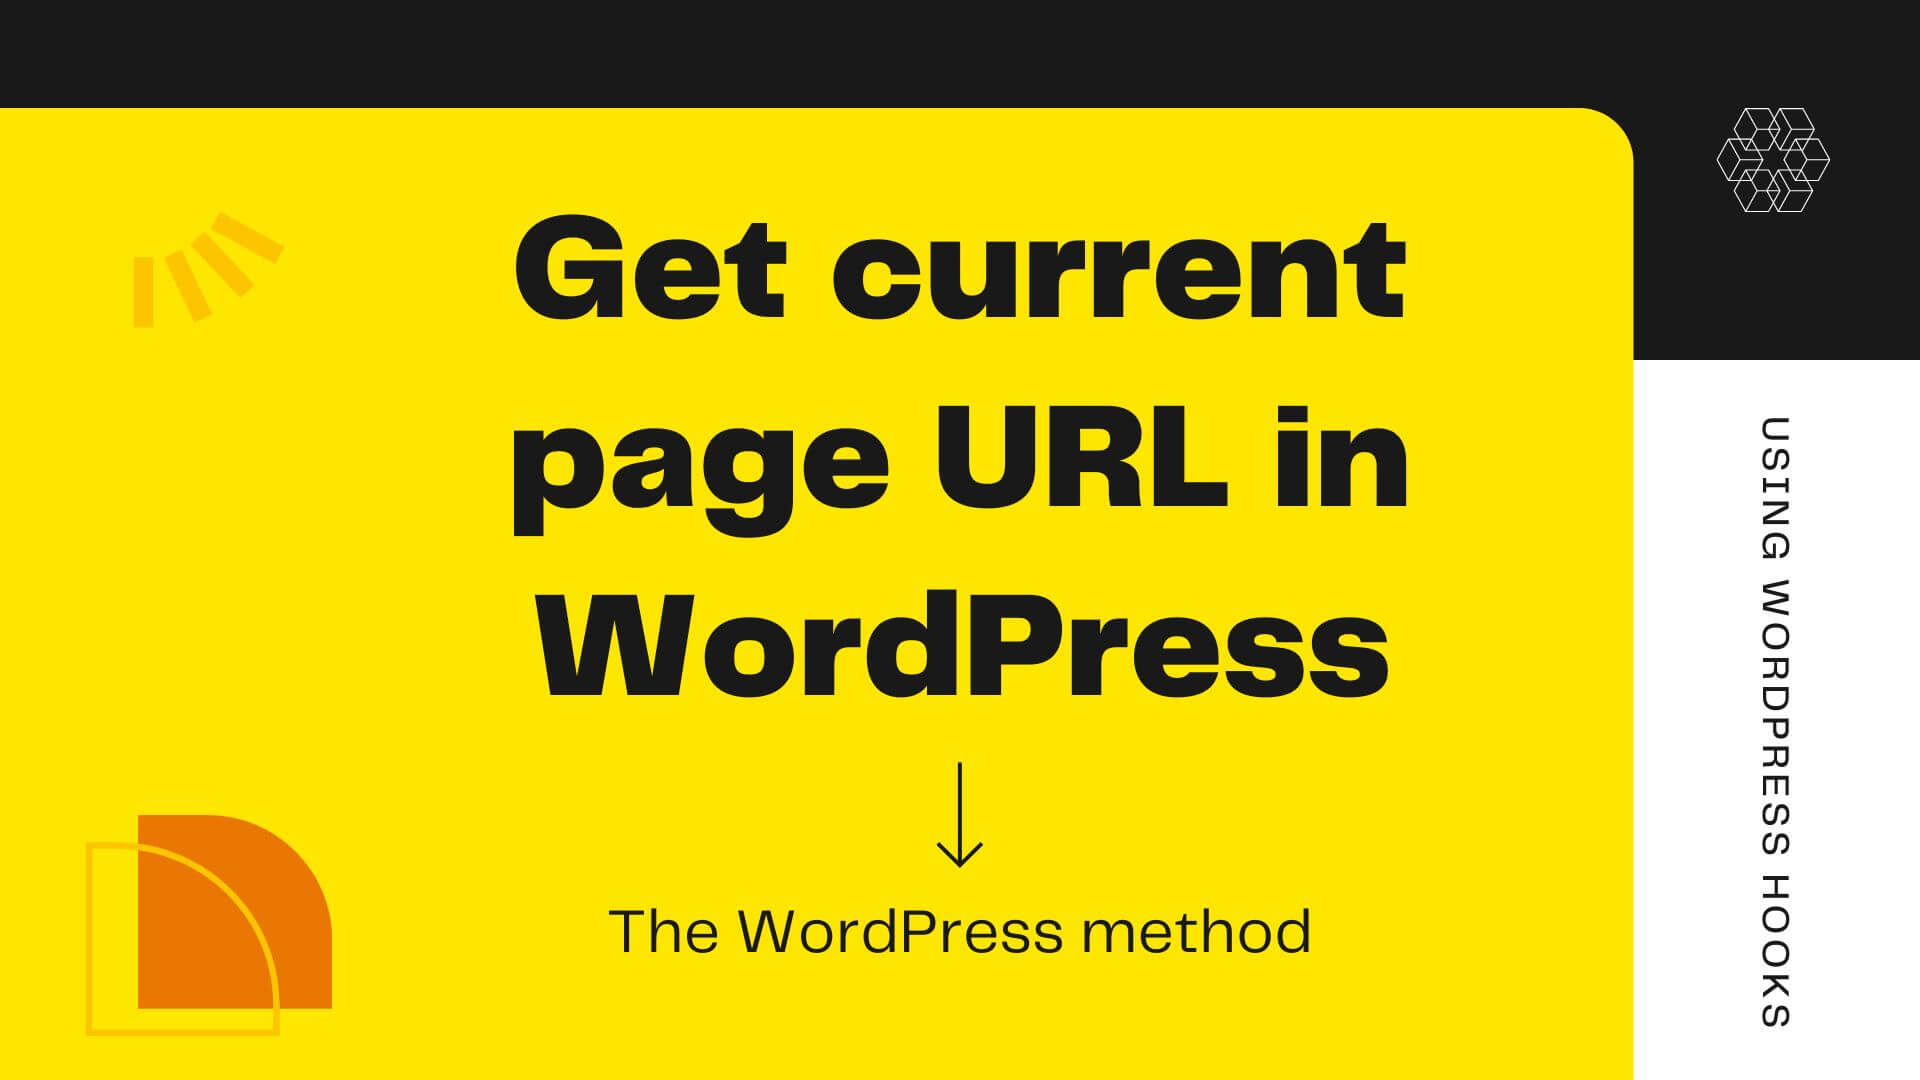 Get current page URL in WordPress